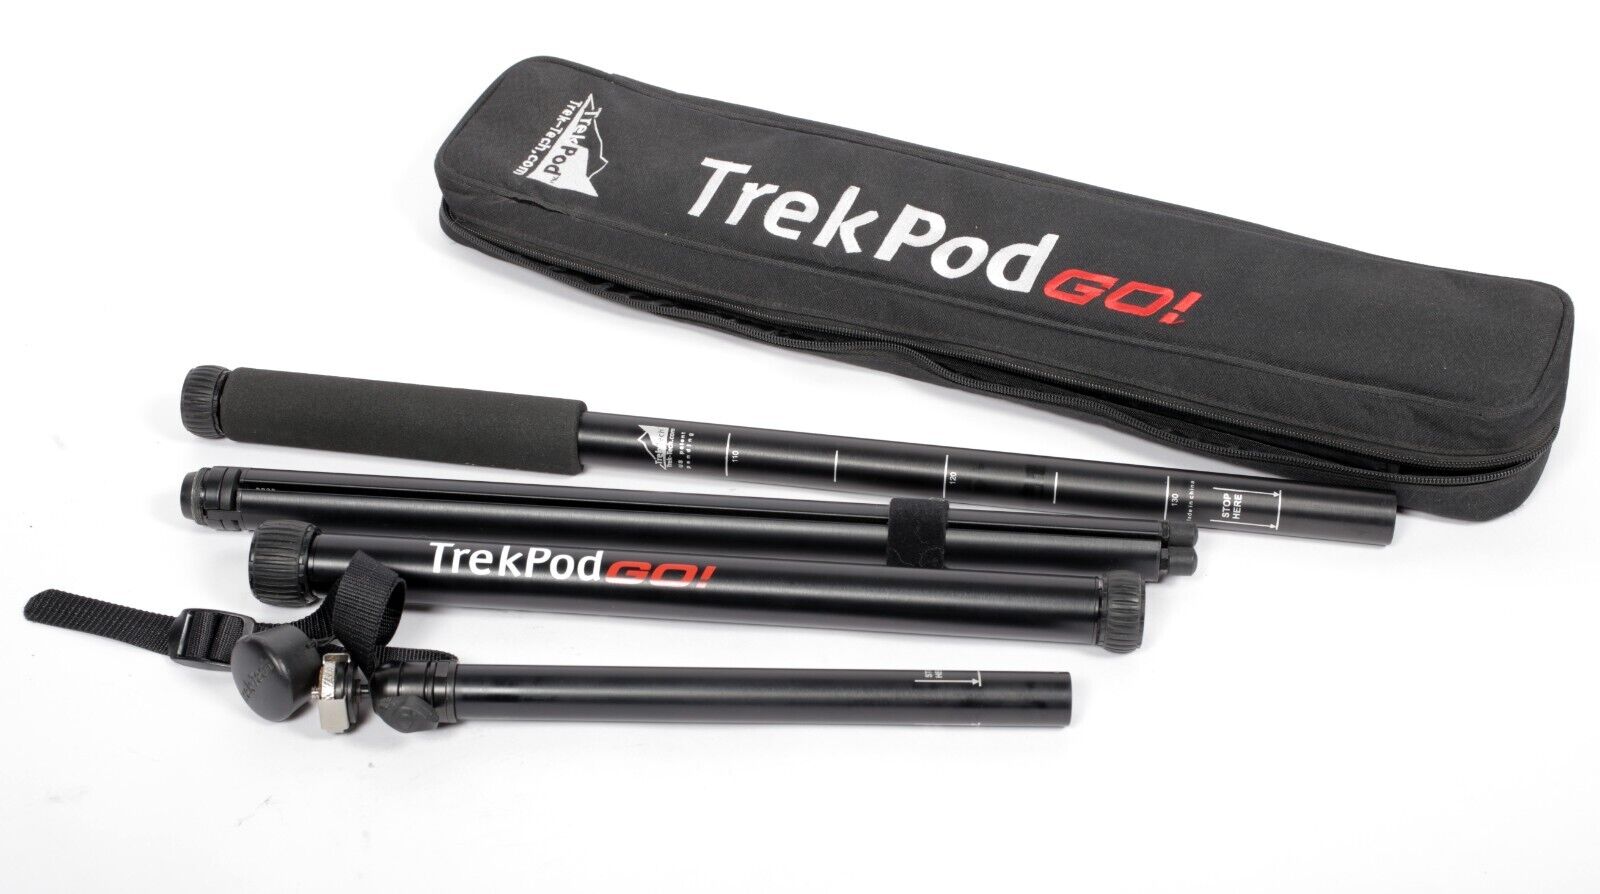 Trek Tech Trek Pod Go! monopod walking stick with ball head and